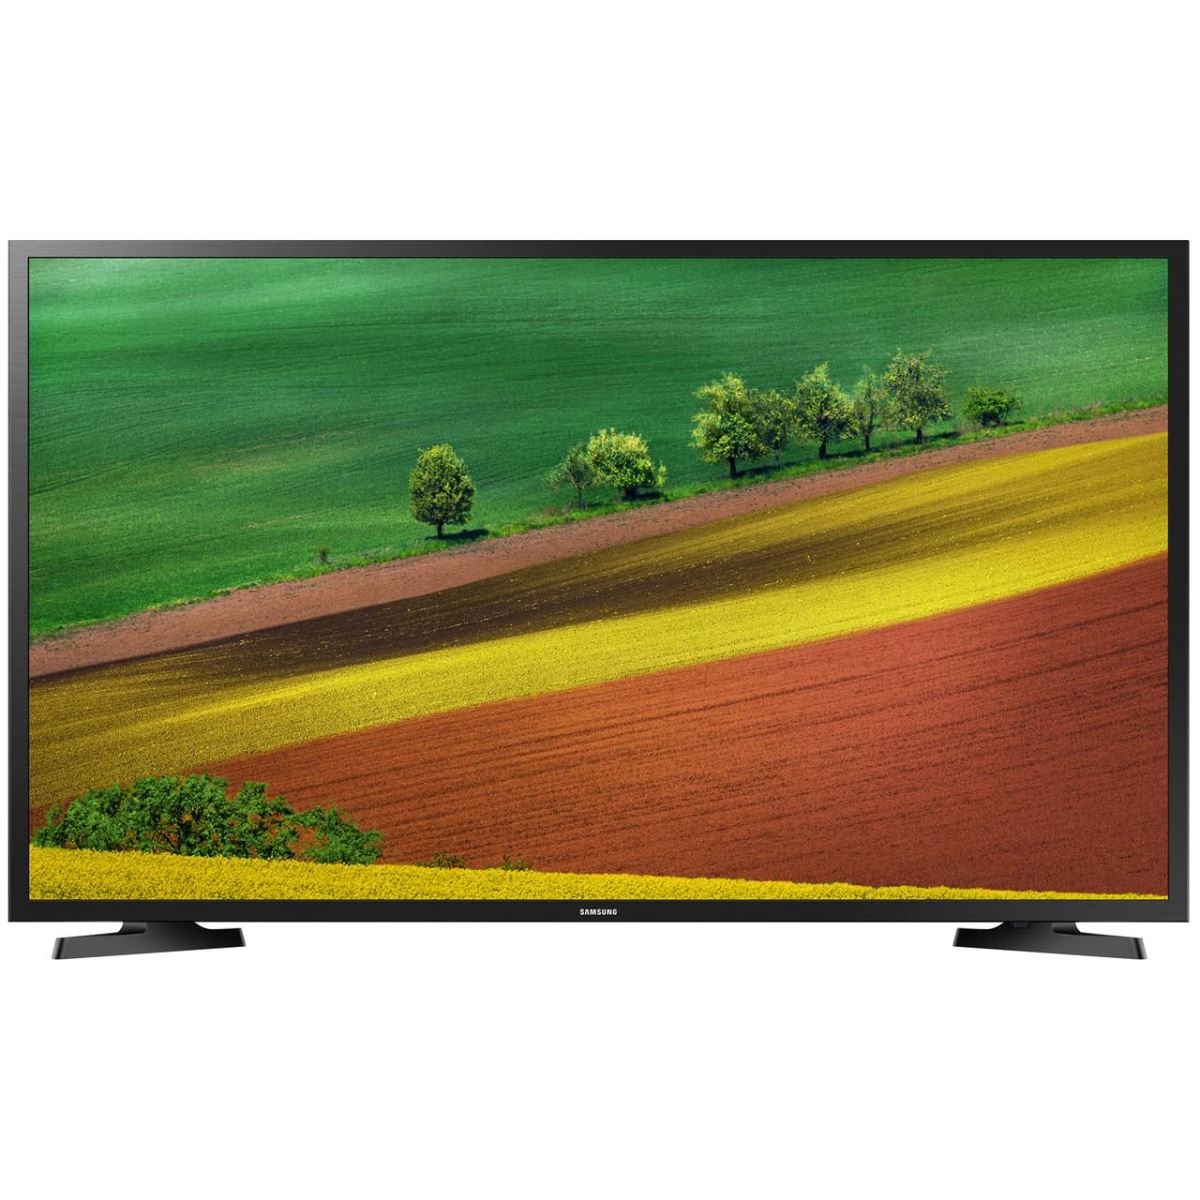 Televizor LED Samsung 32N4003A, 80 cm, HD, HDMI, USB, Slot CI+, Negru